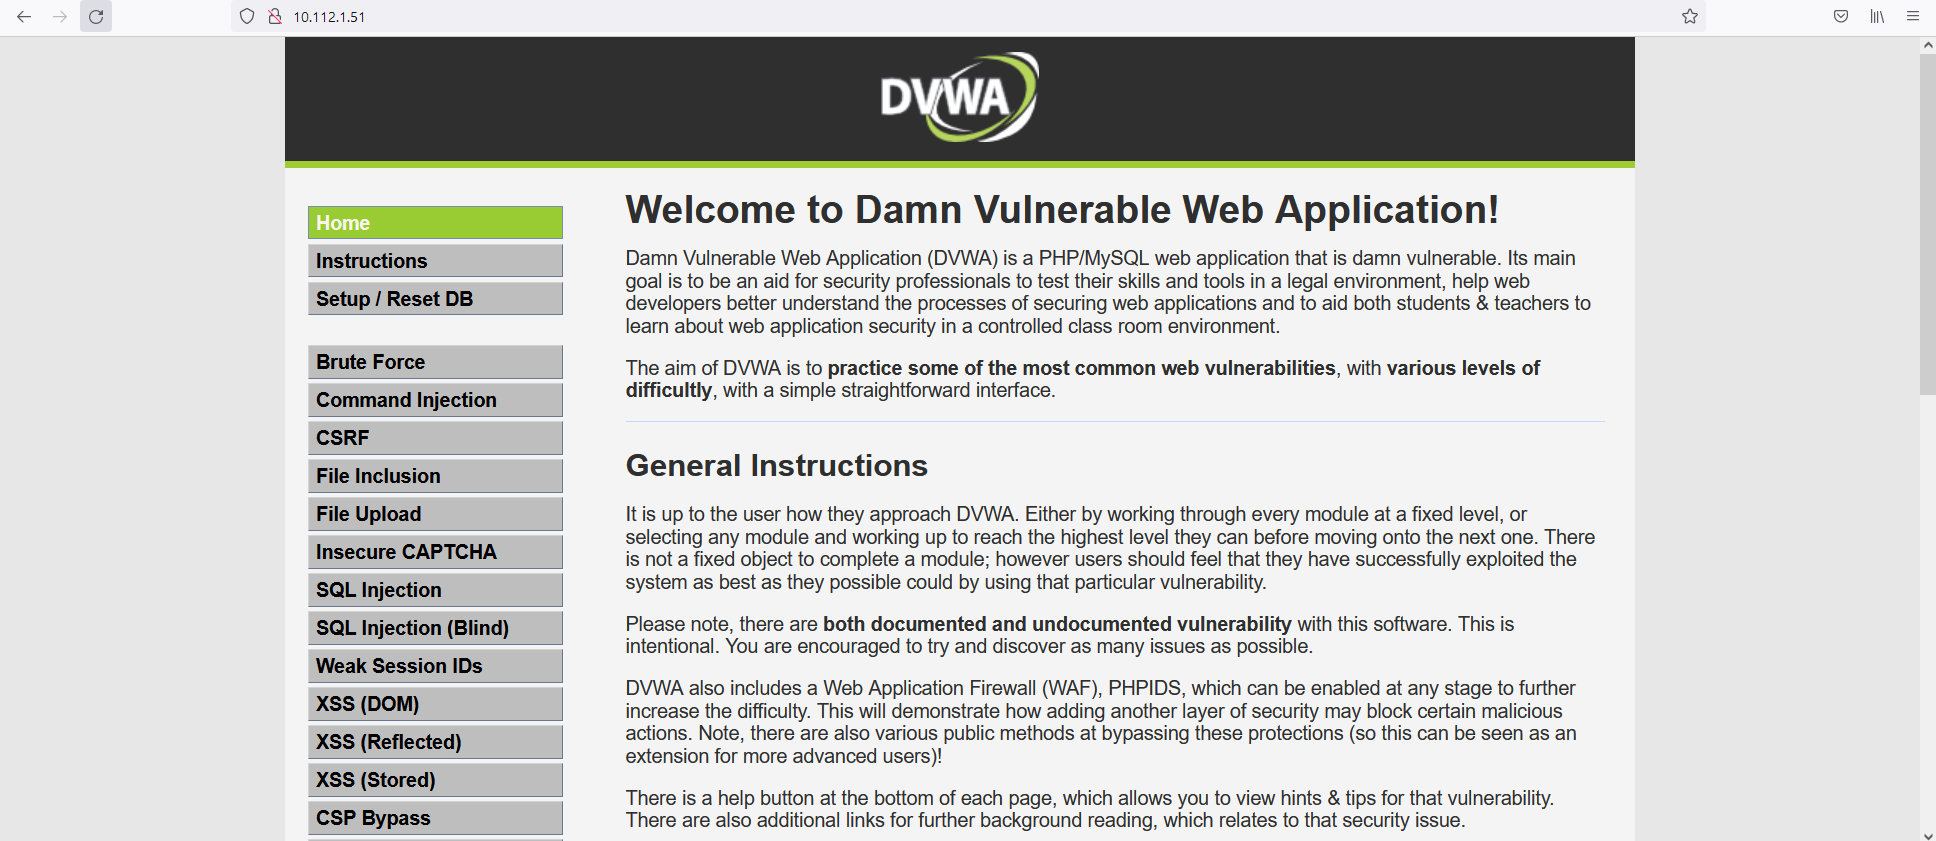 Damn vulnerable web application. DVWA. XSS. DVWA logo. Object fix